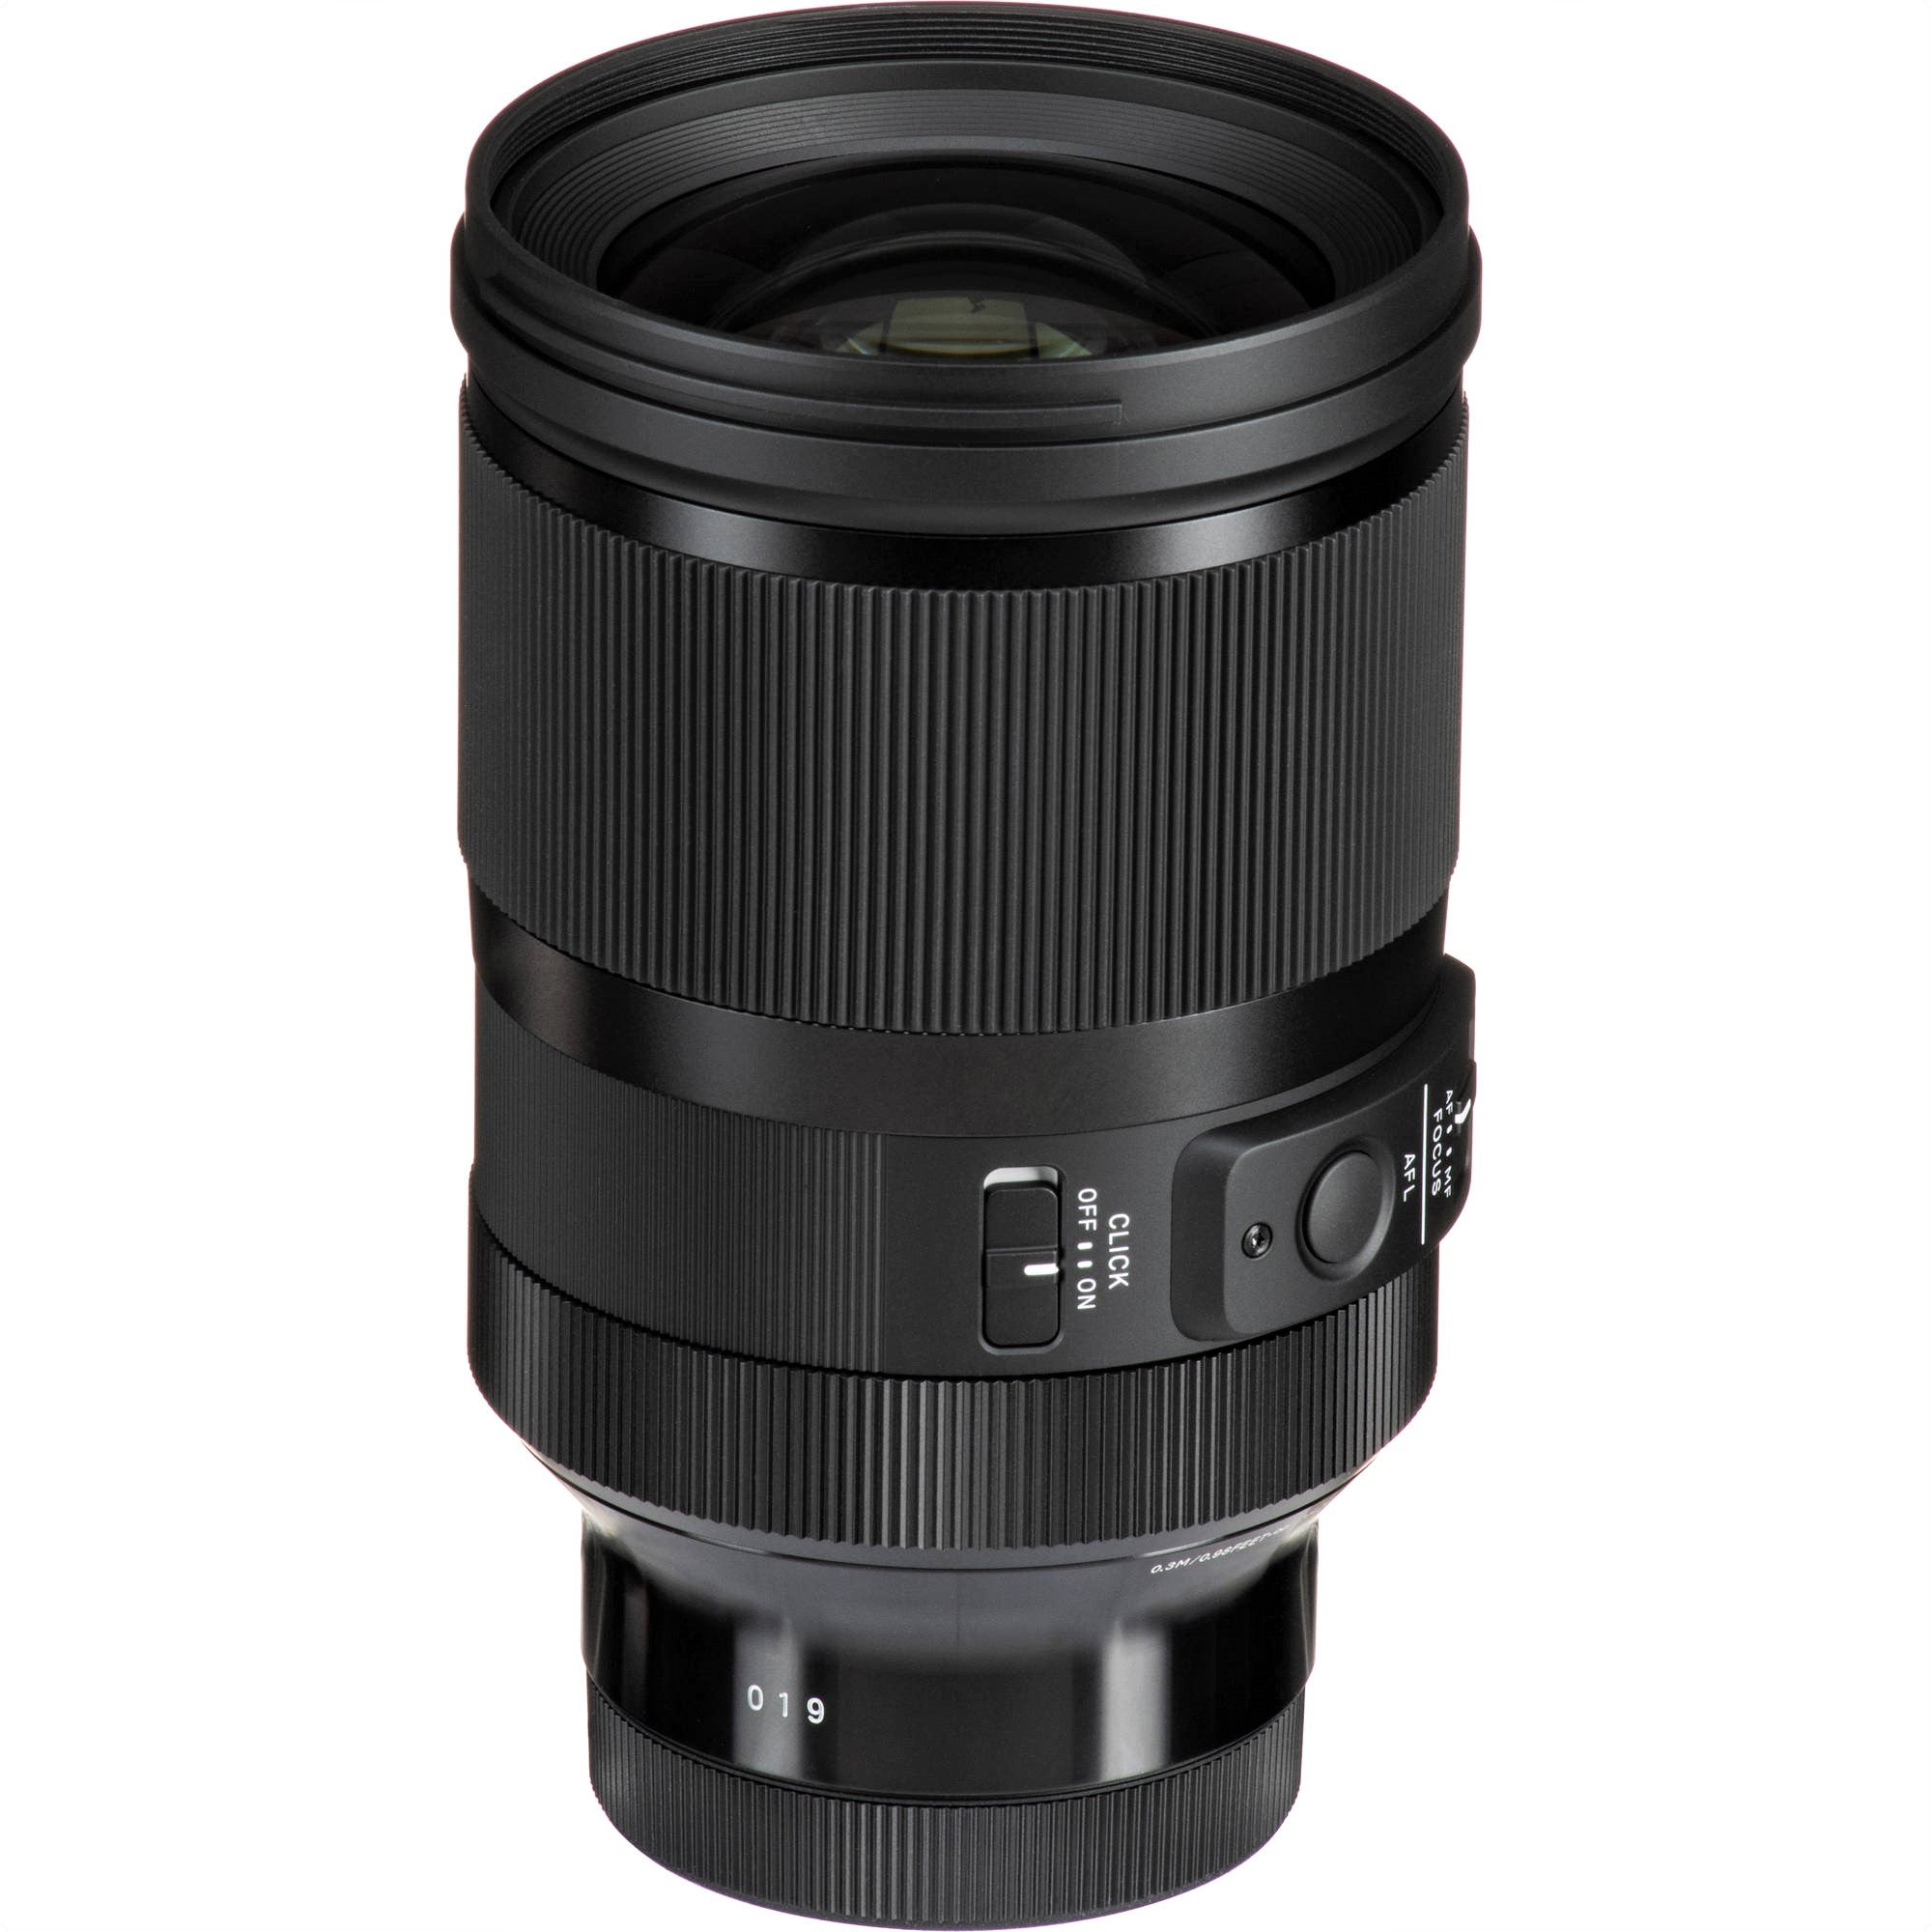 Sigma 35mm F1.2 DG DN Art Lens for Leica L